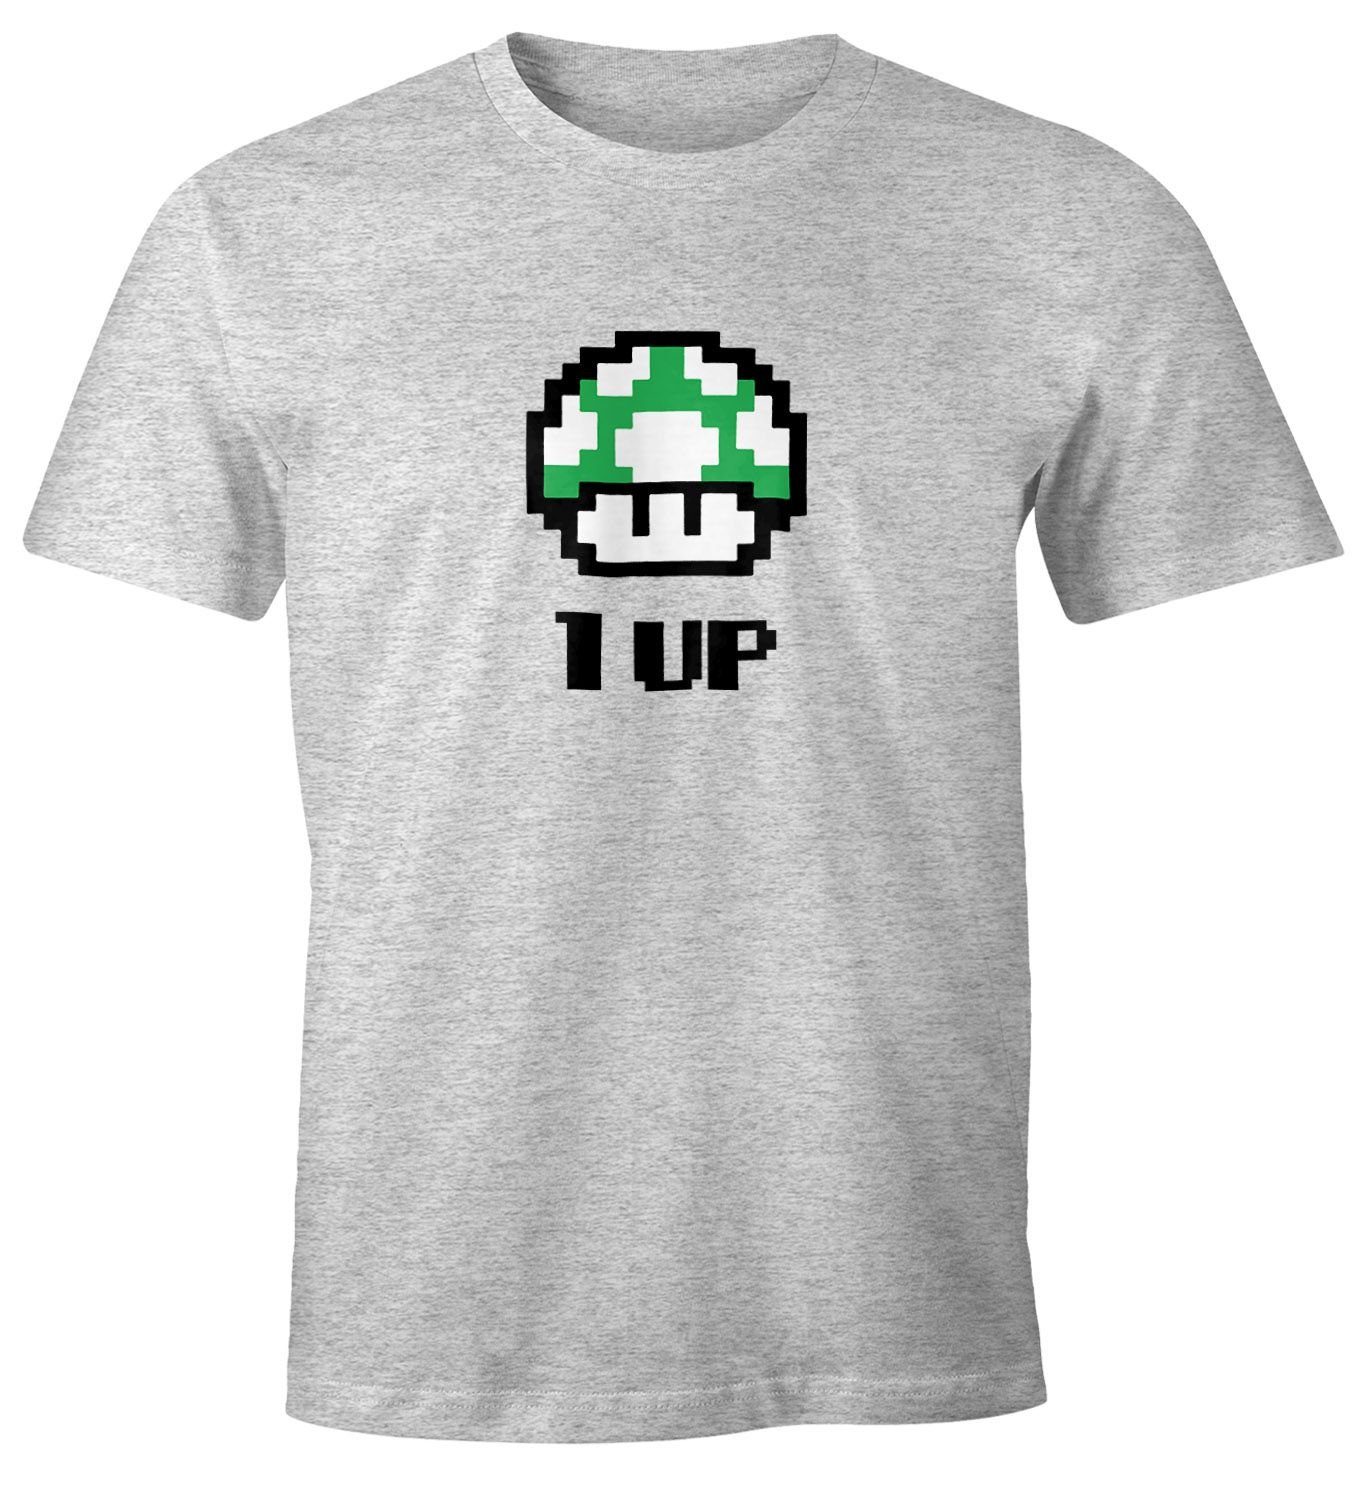 Pixel-Pilz mit Geburtstag Print-Shirt Fun-Shirt Moonworks® 90er 1-Up-Pilz Level-Up Retro T-Shirt Herren Konsole Print grau MoonWorks Gaming